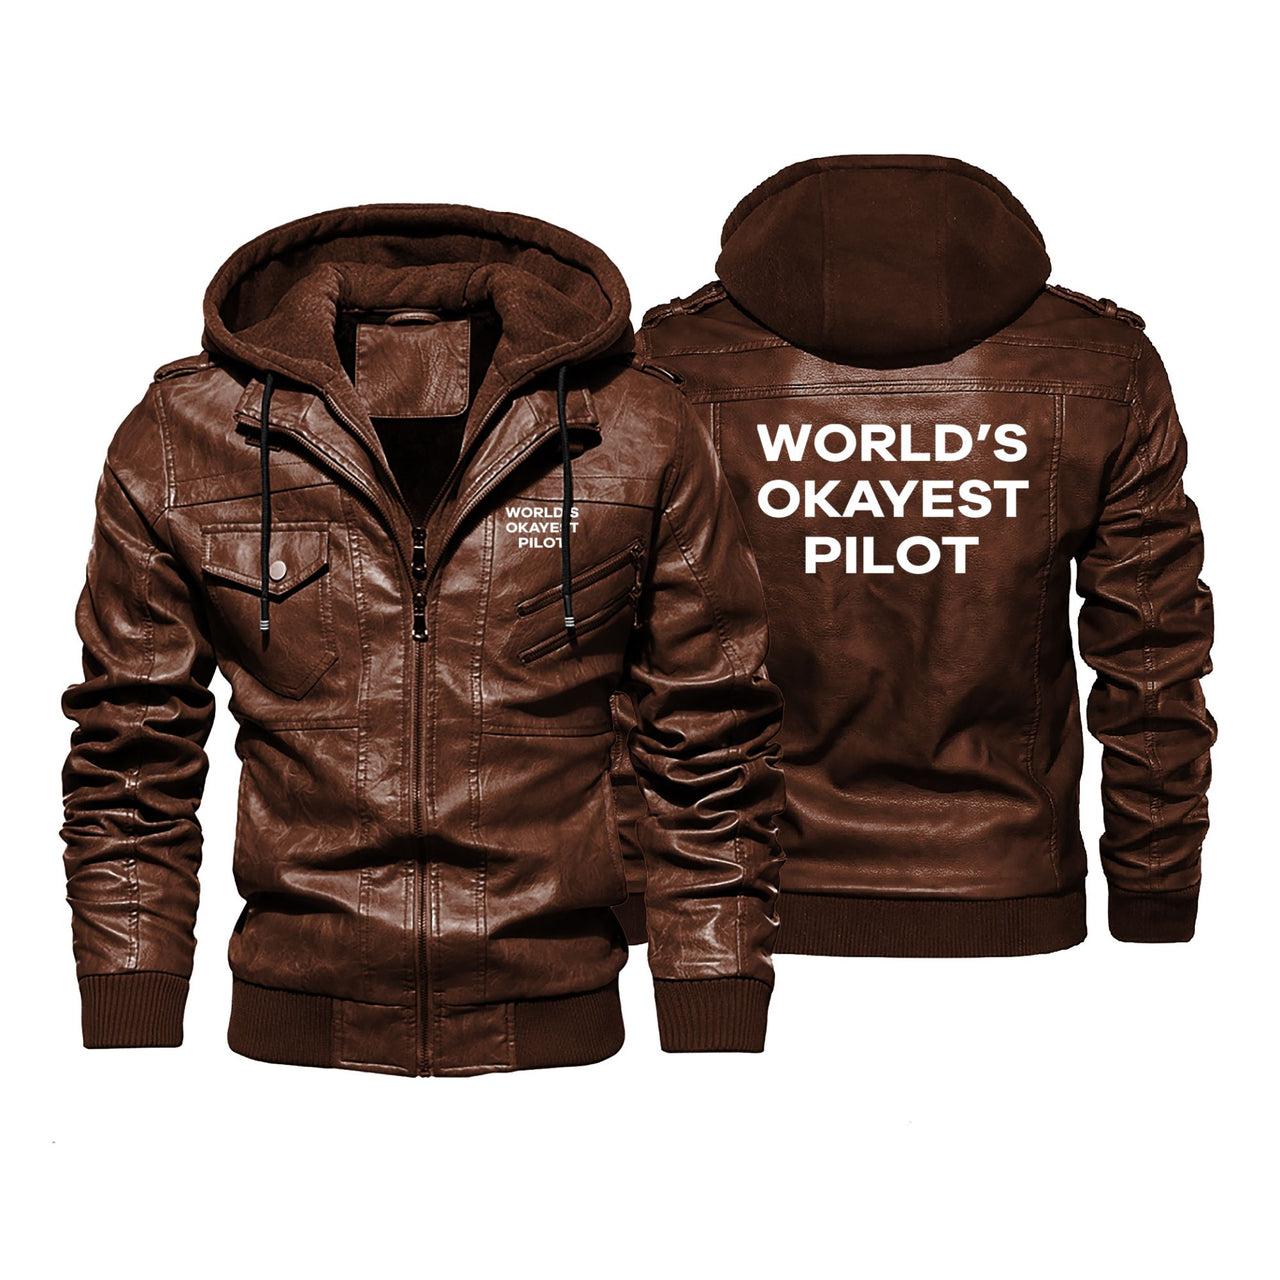 World's Okayest Pilot Designed Hooded Leather Jackets